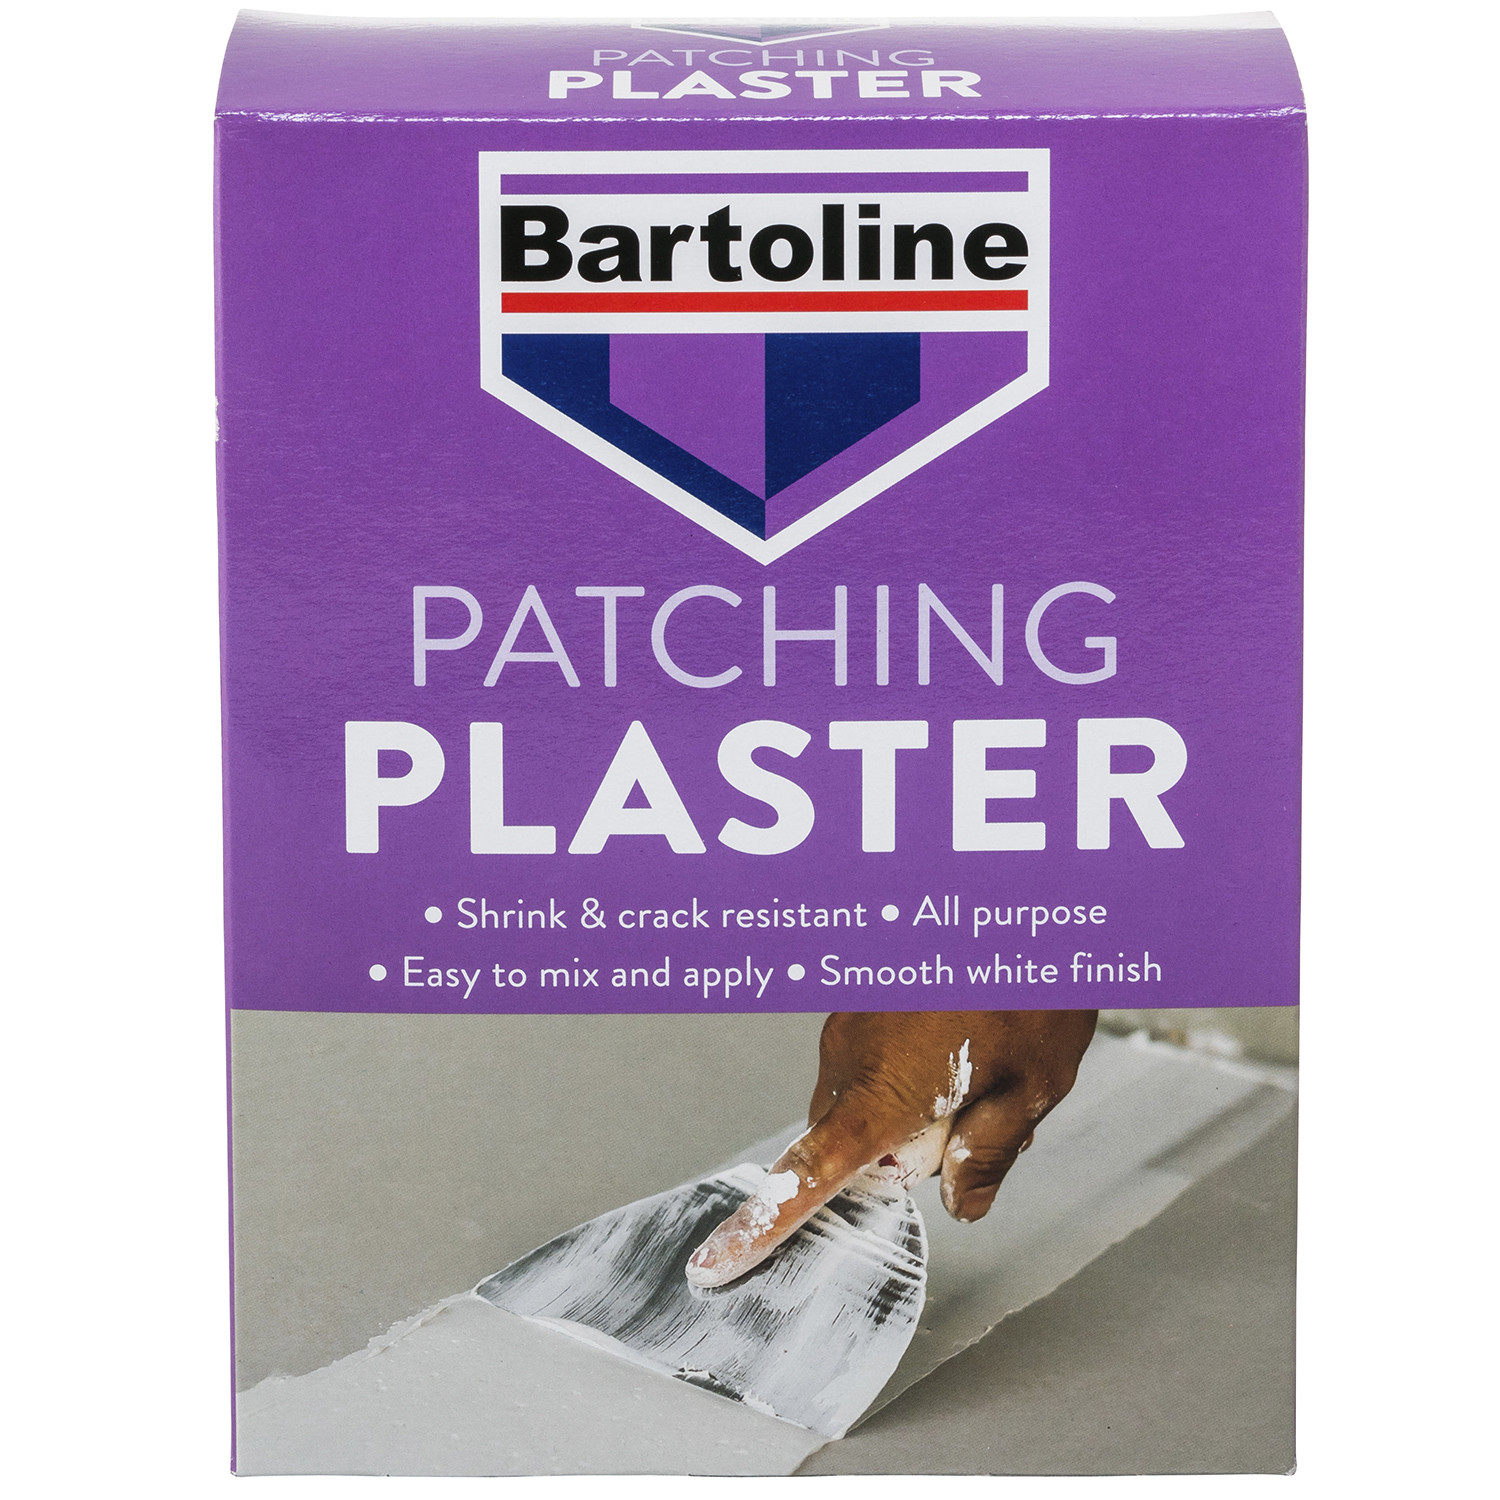 Bartoline Patching Plaster Image